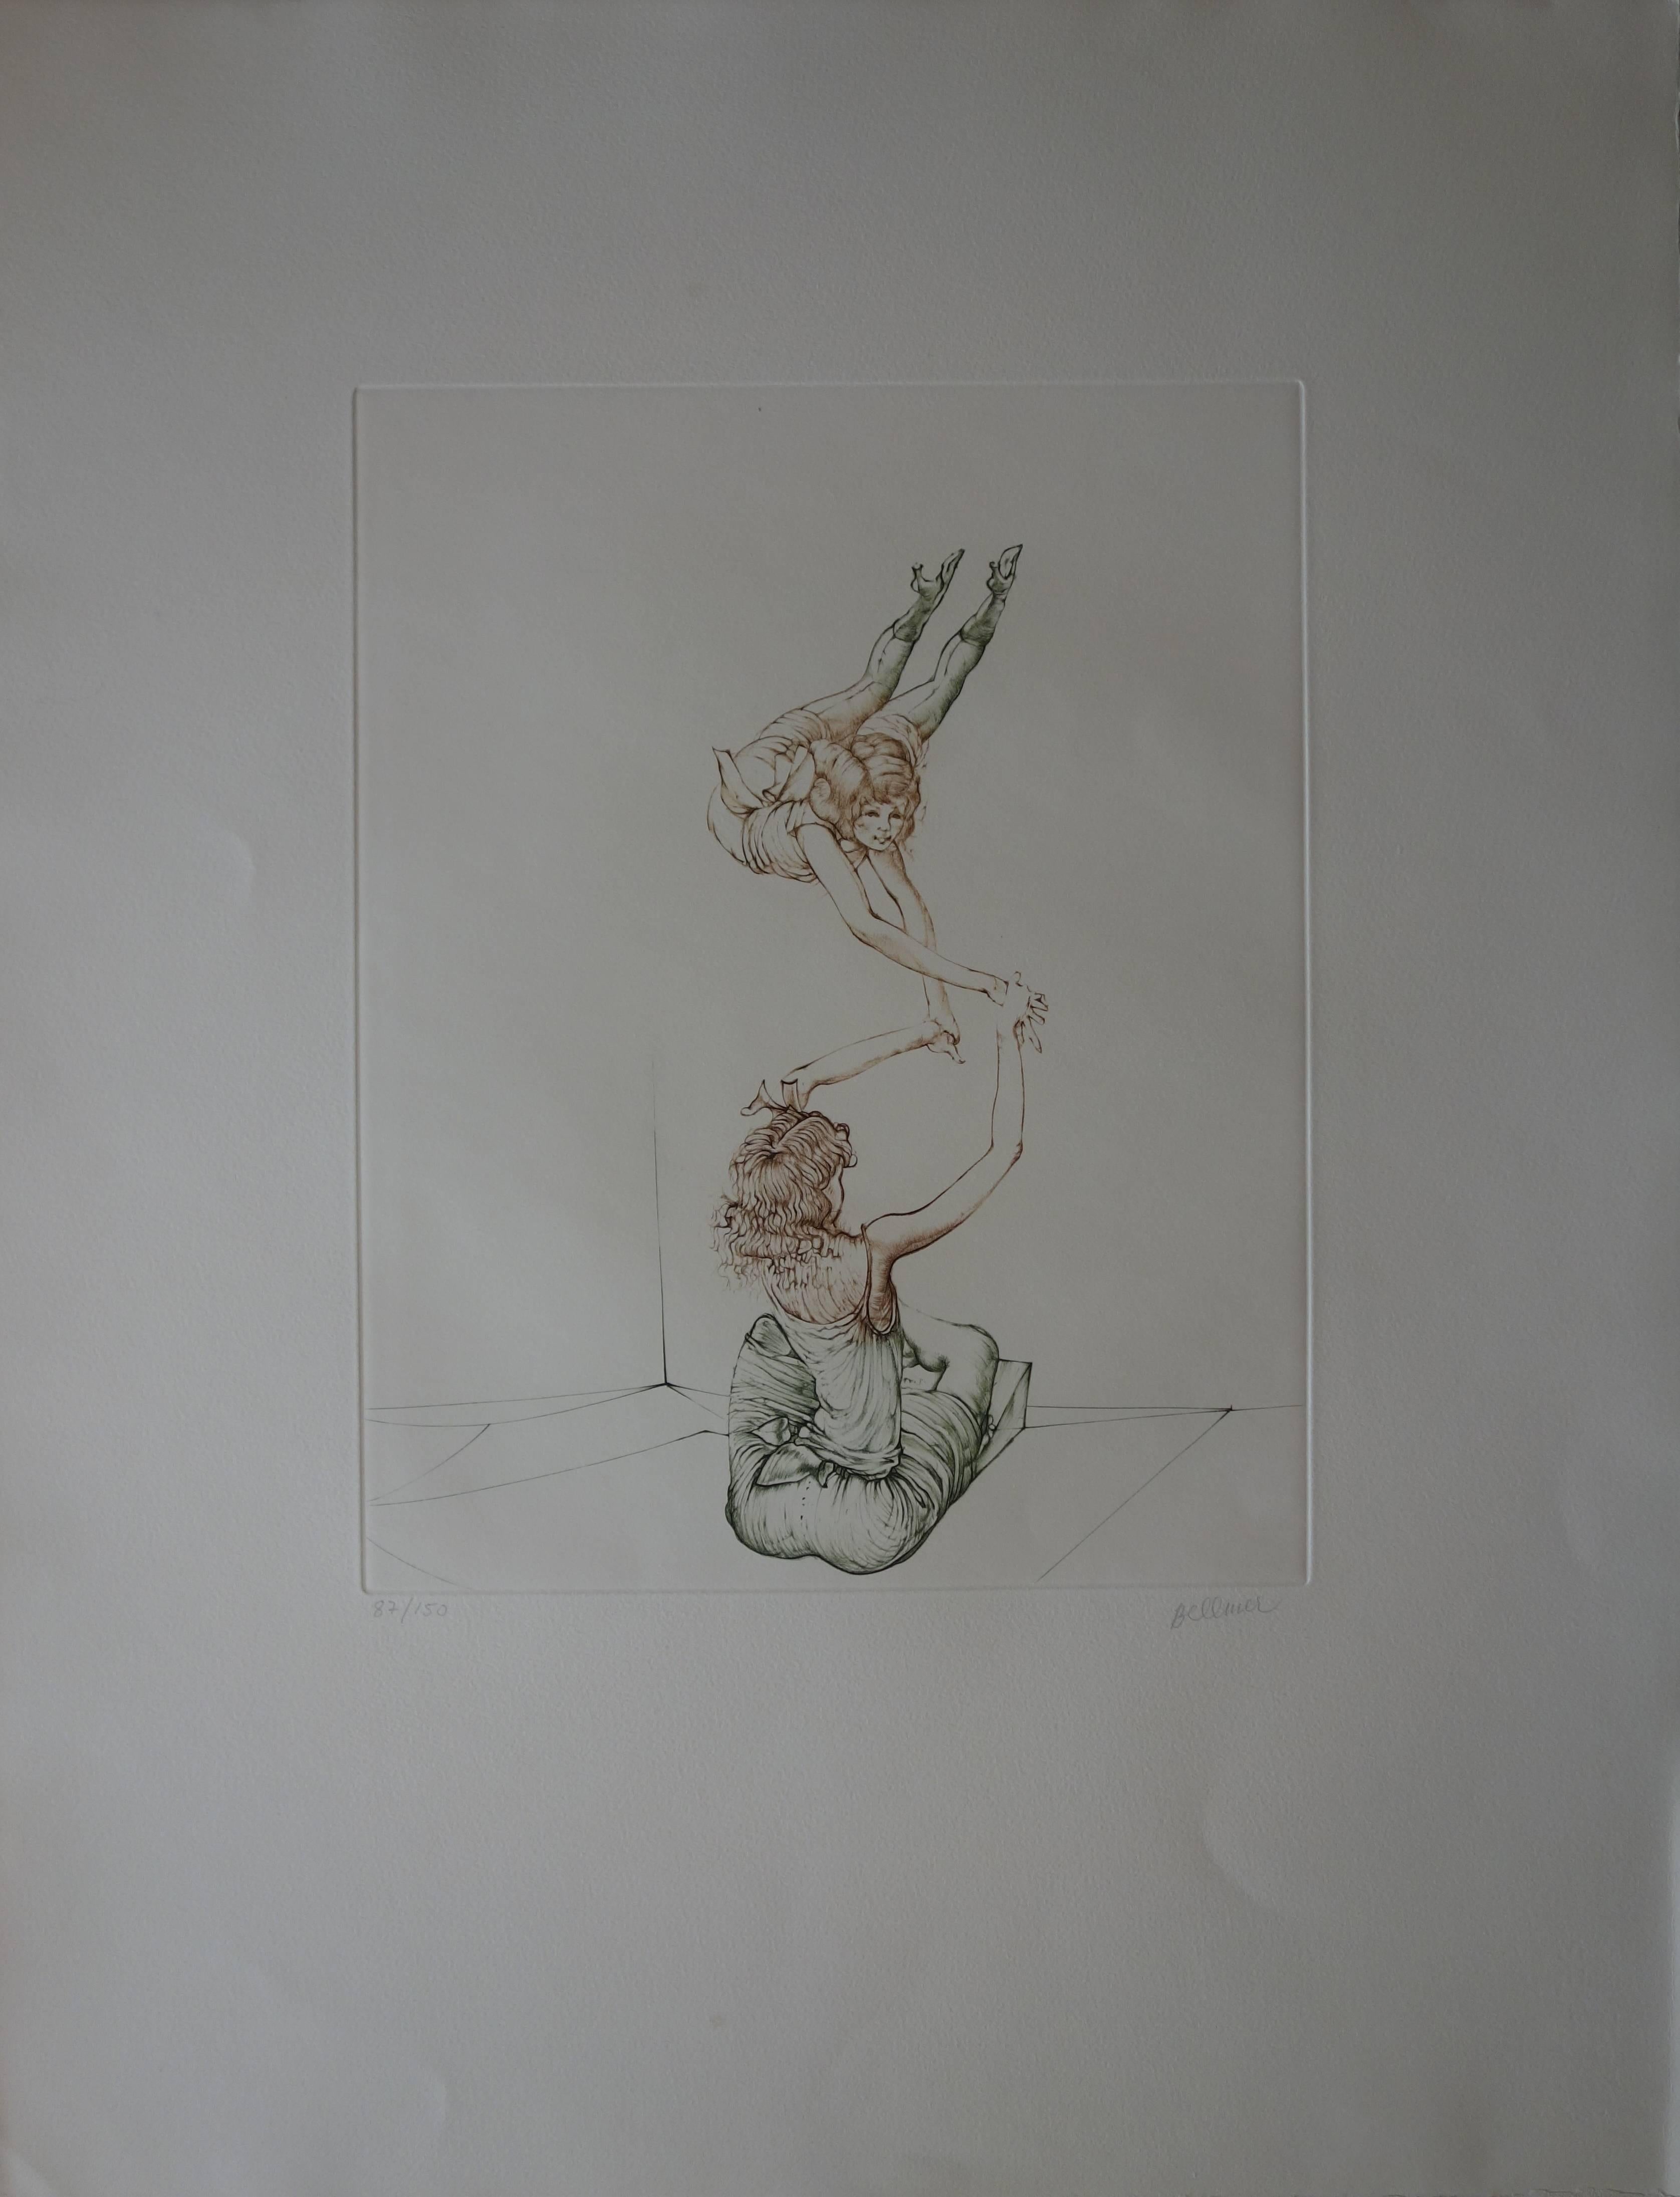 The Equilibrists - Original handsigned etching - 150ex - Modern Print by Hans Bellmer